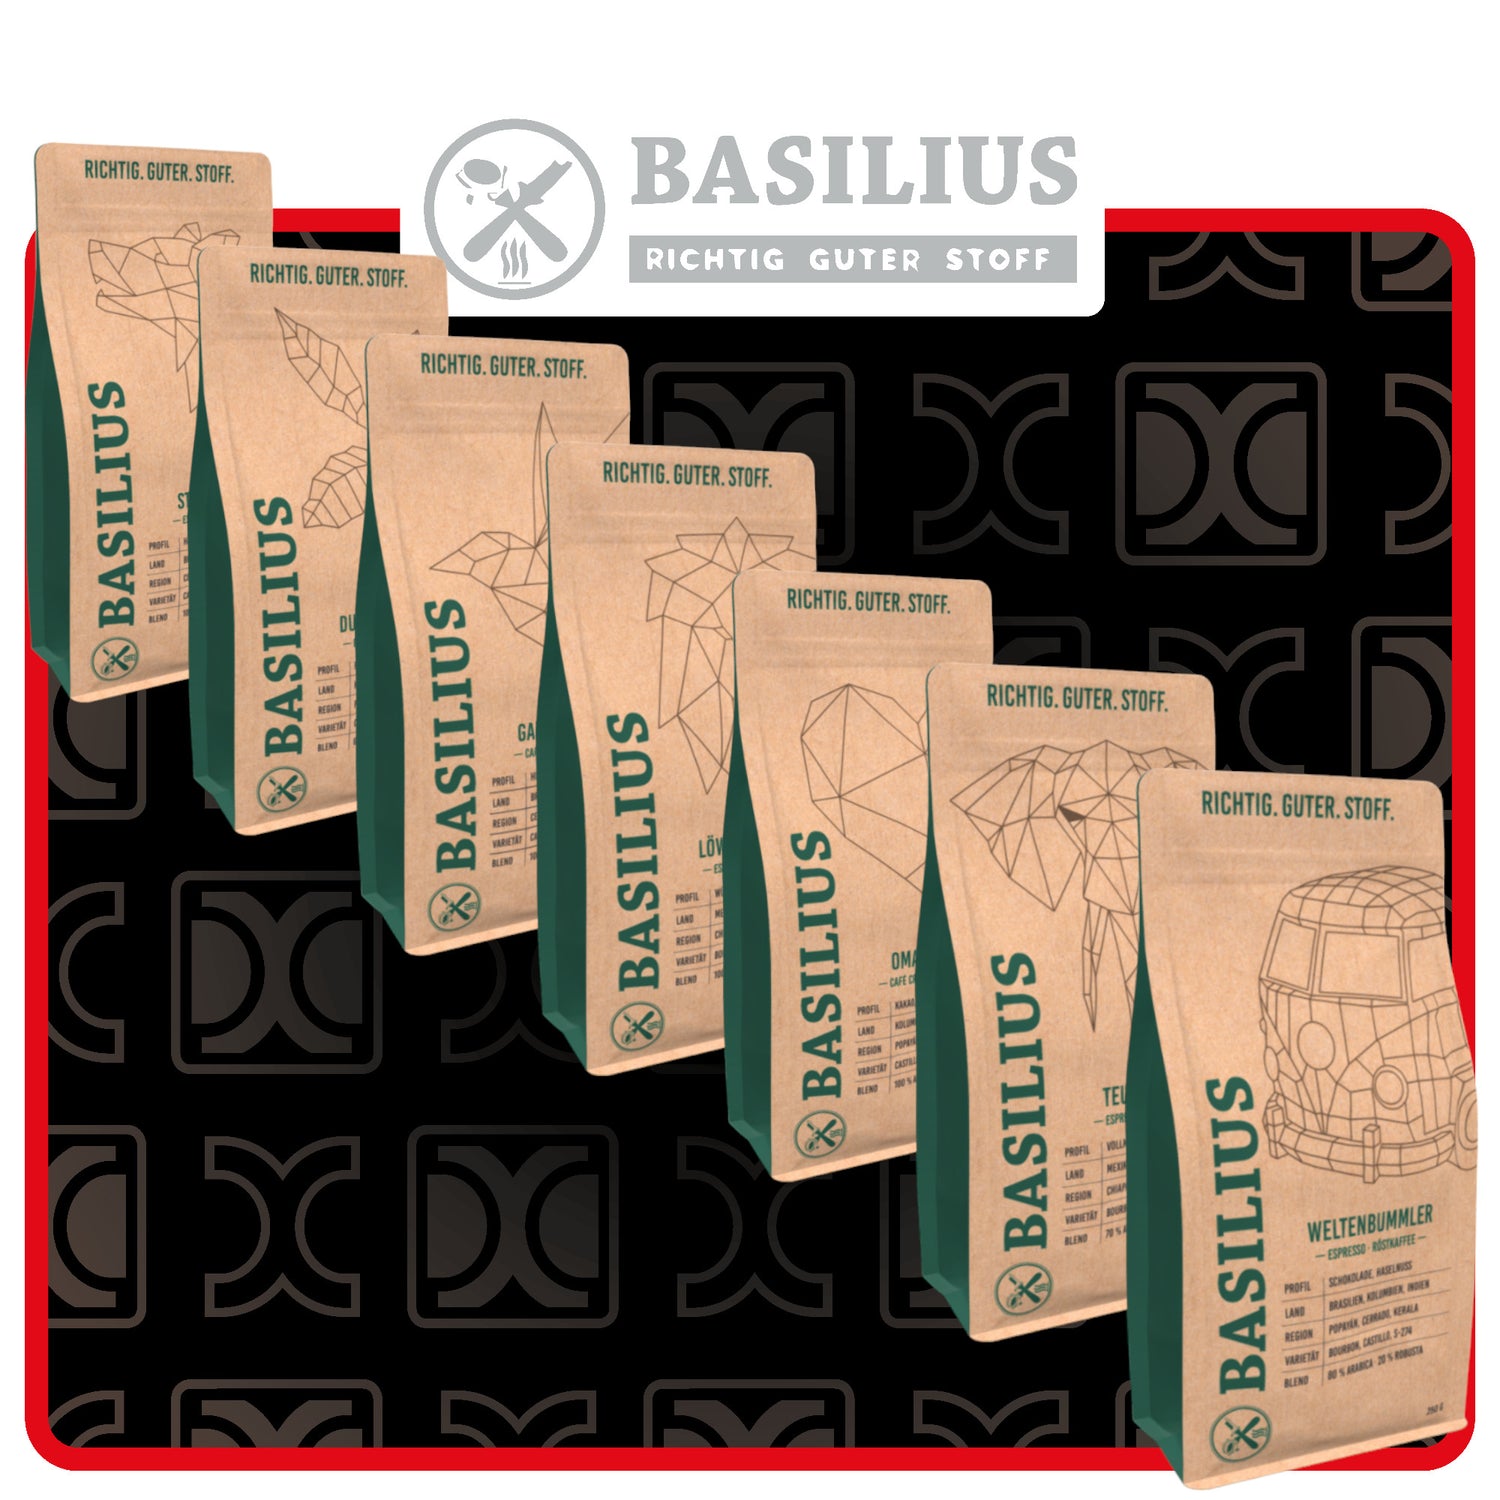 Basilius Kaffee